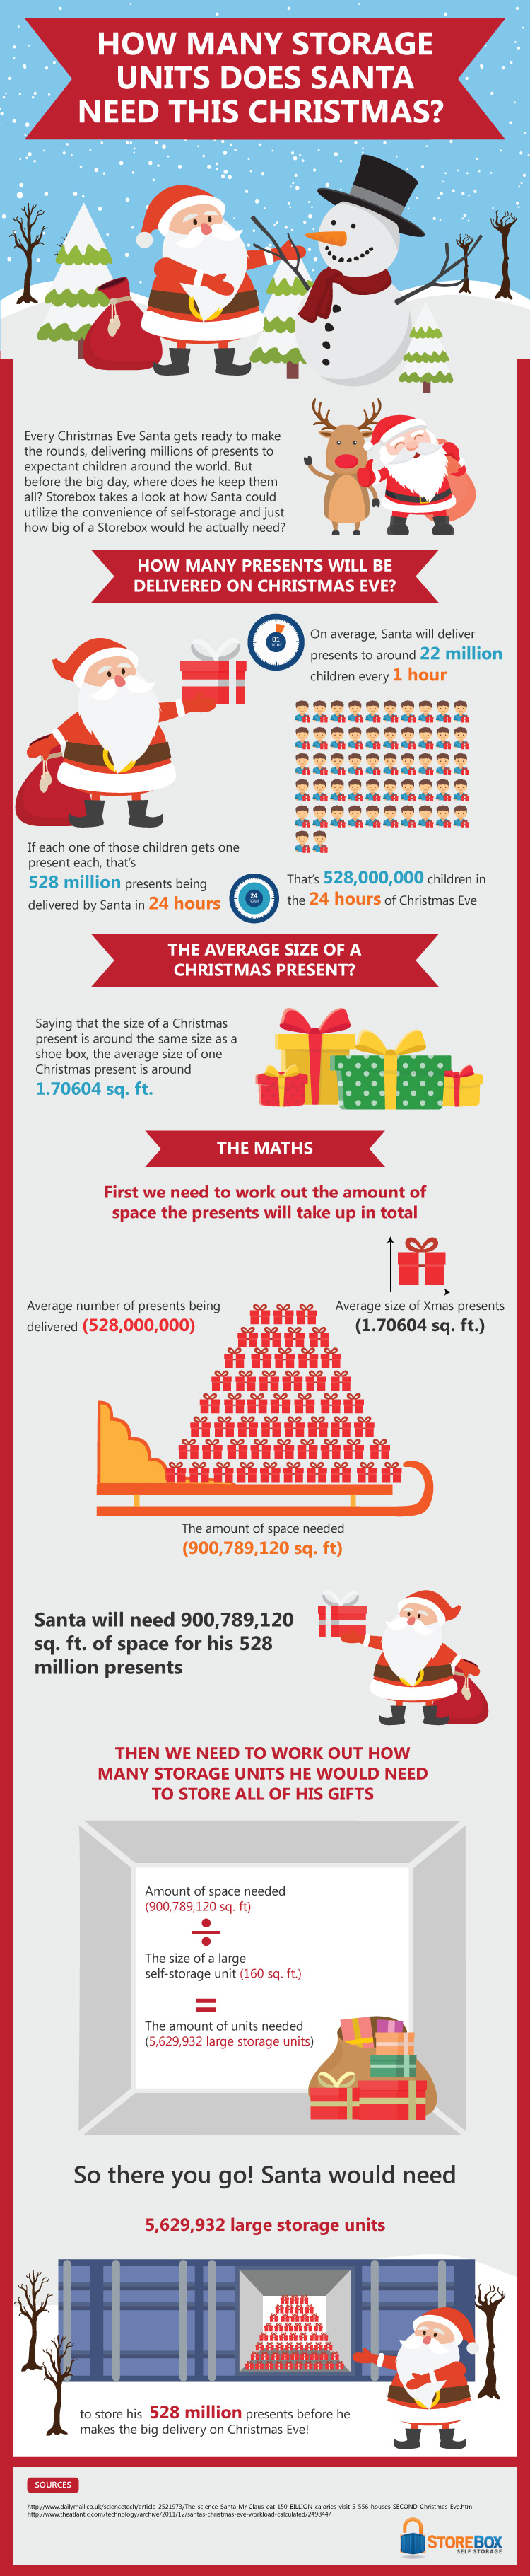 storebox_santa_infographic